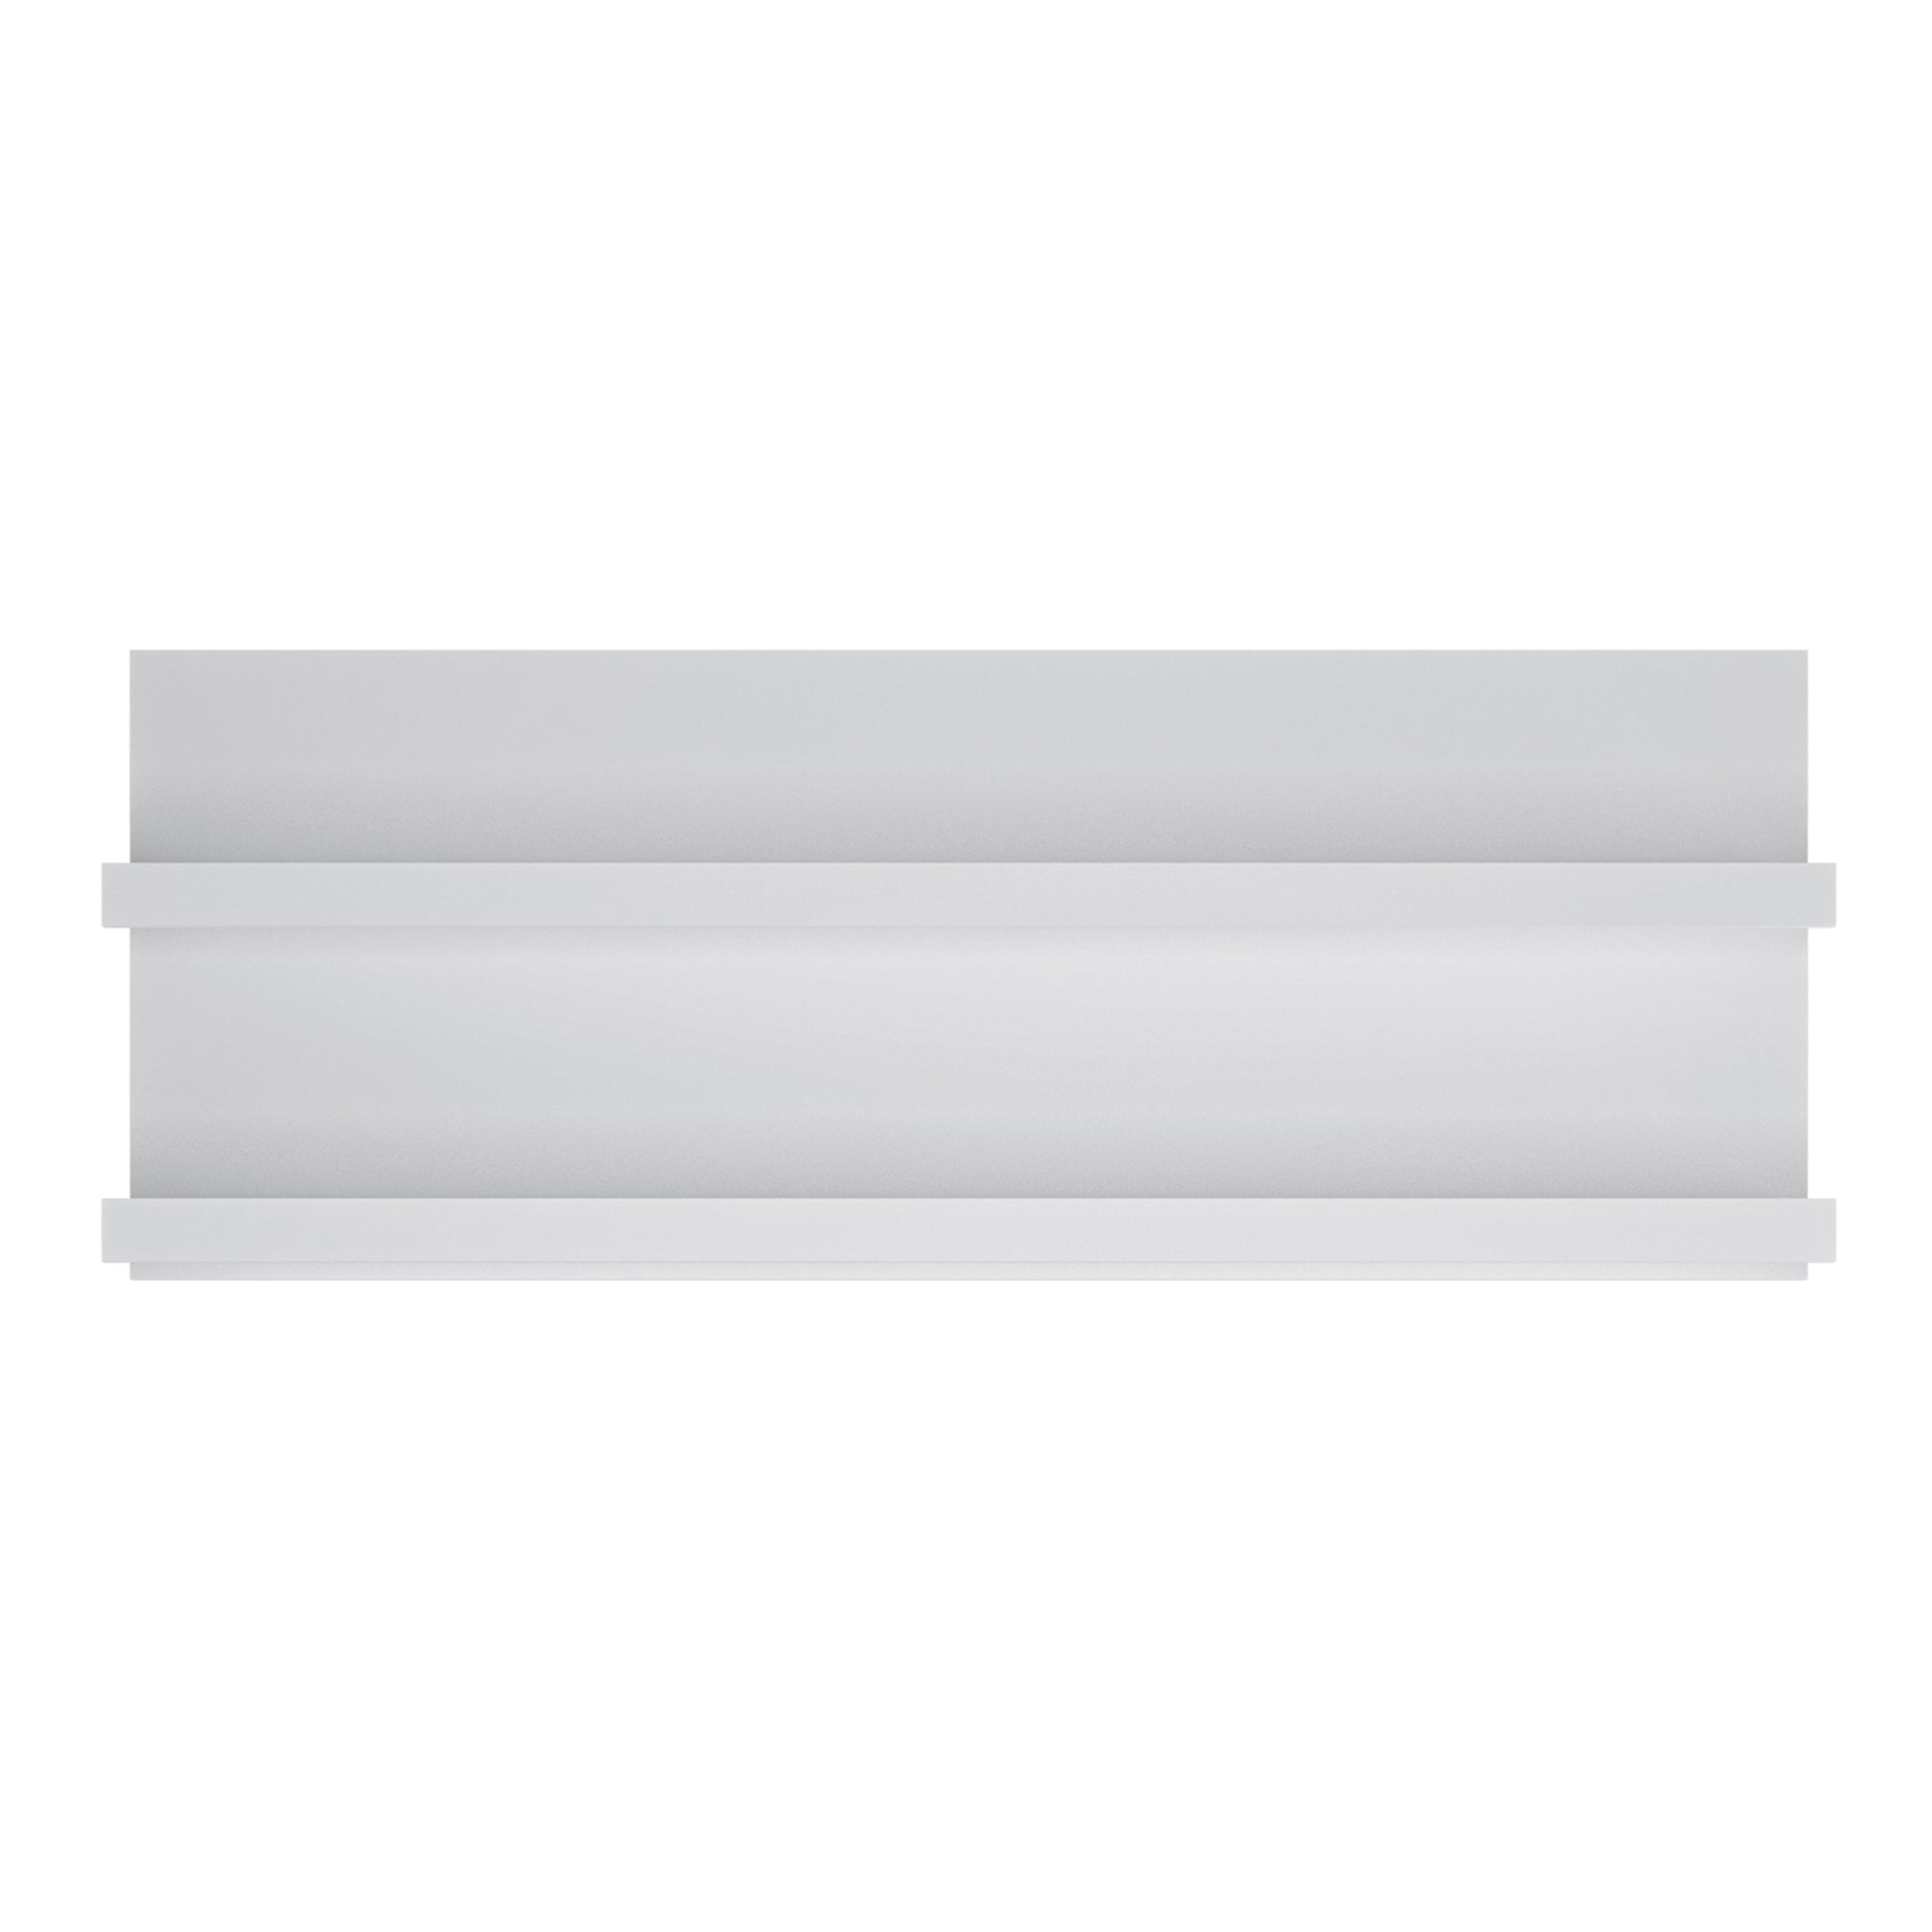 Fribo White Fribo 166 cm wide wall shelf in White